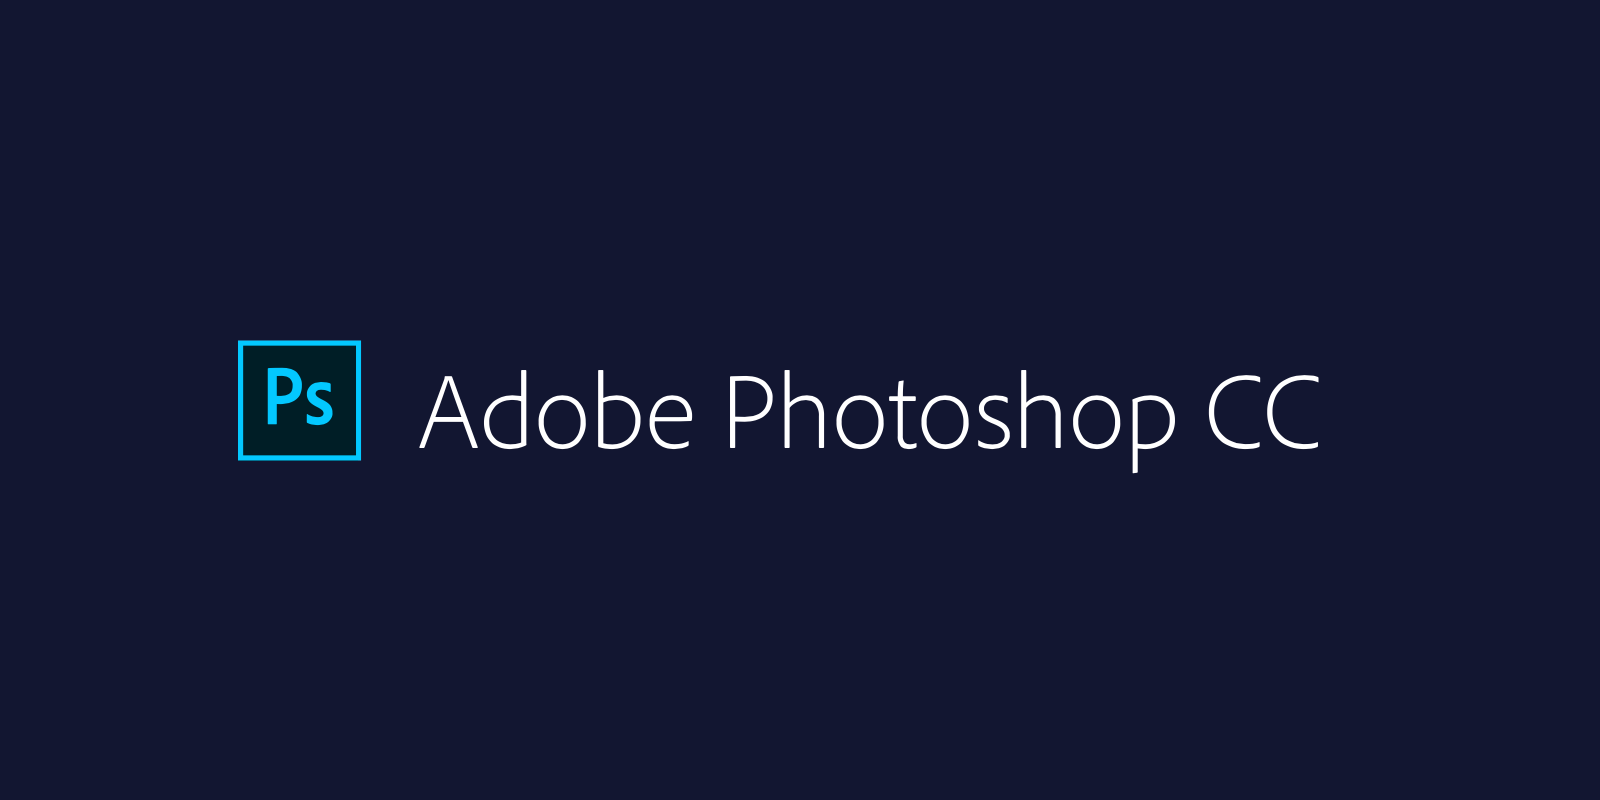 Adobe Photoshop CC 24.0.0 Crack